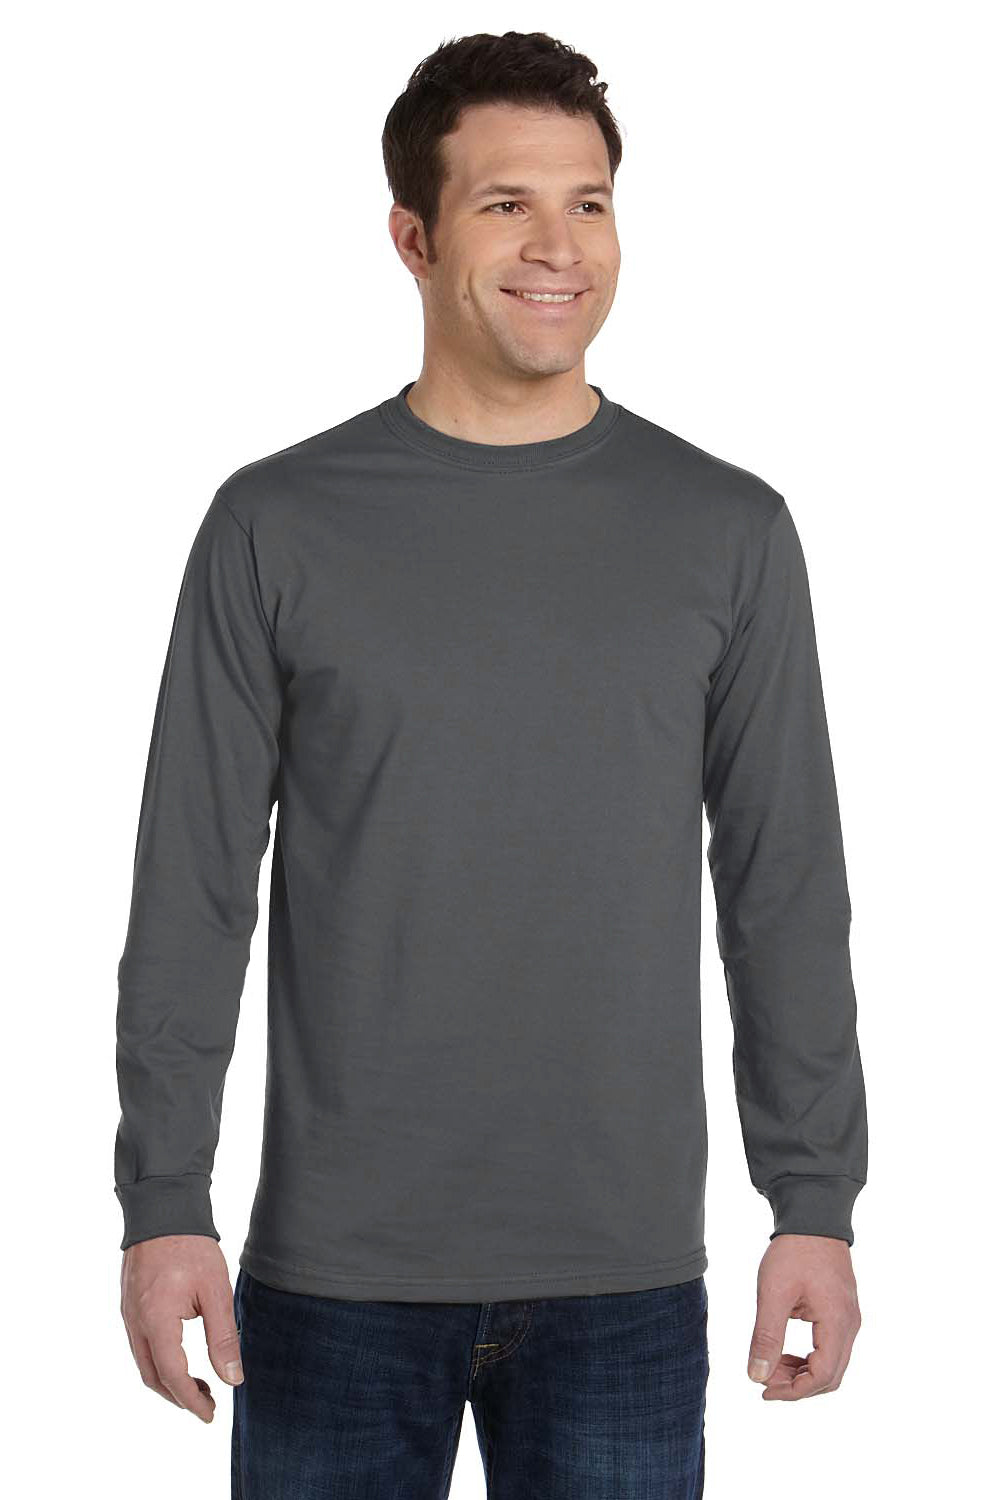 Econscious EC1500 Mens Long Sleeve Crewneck T-Shirt Charcoal Grey Front